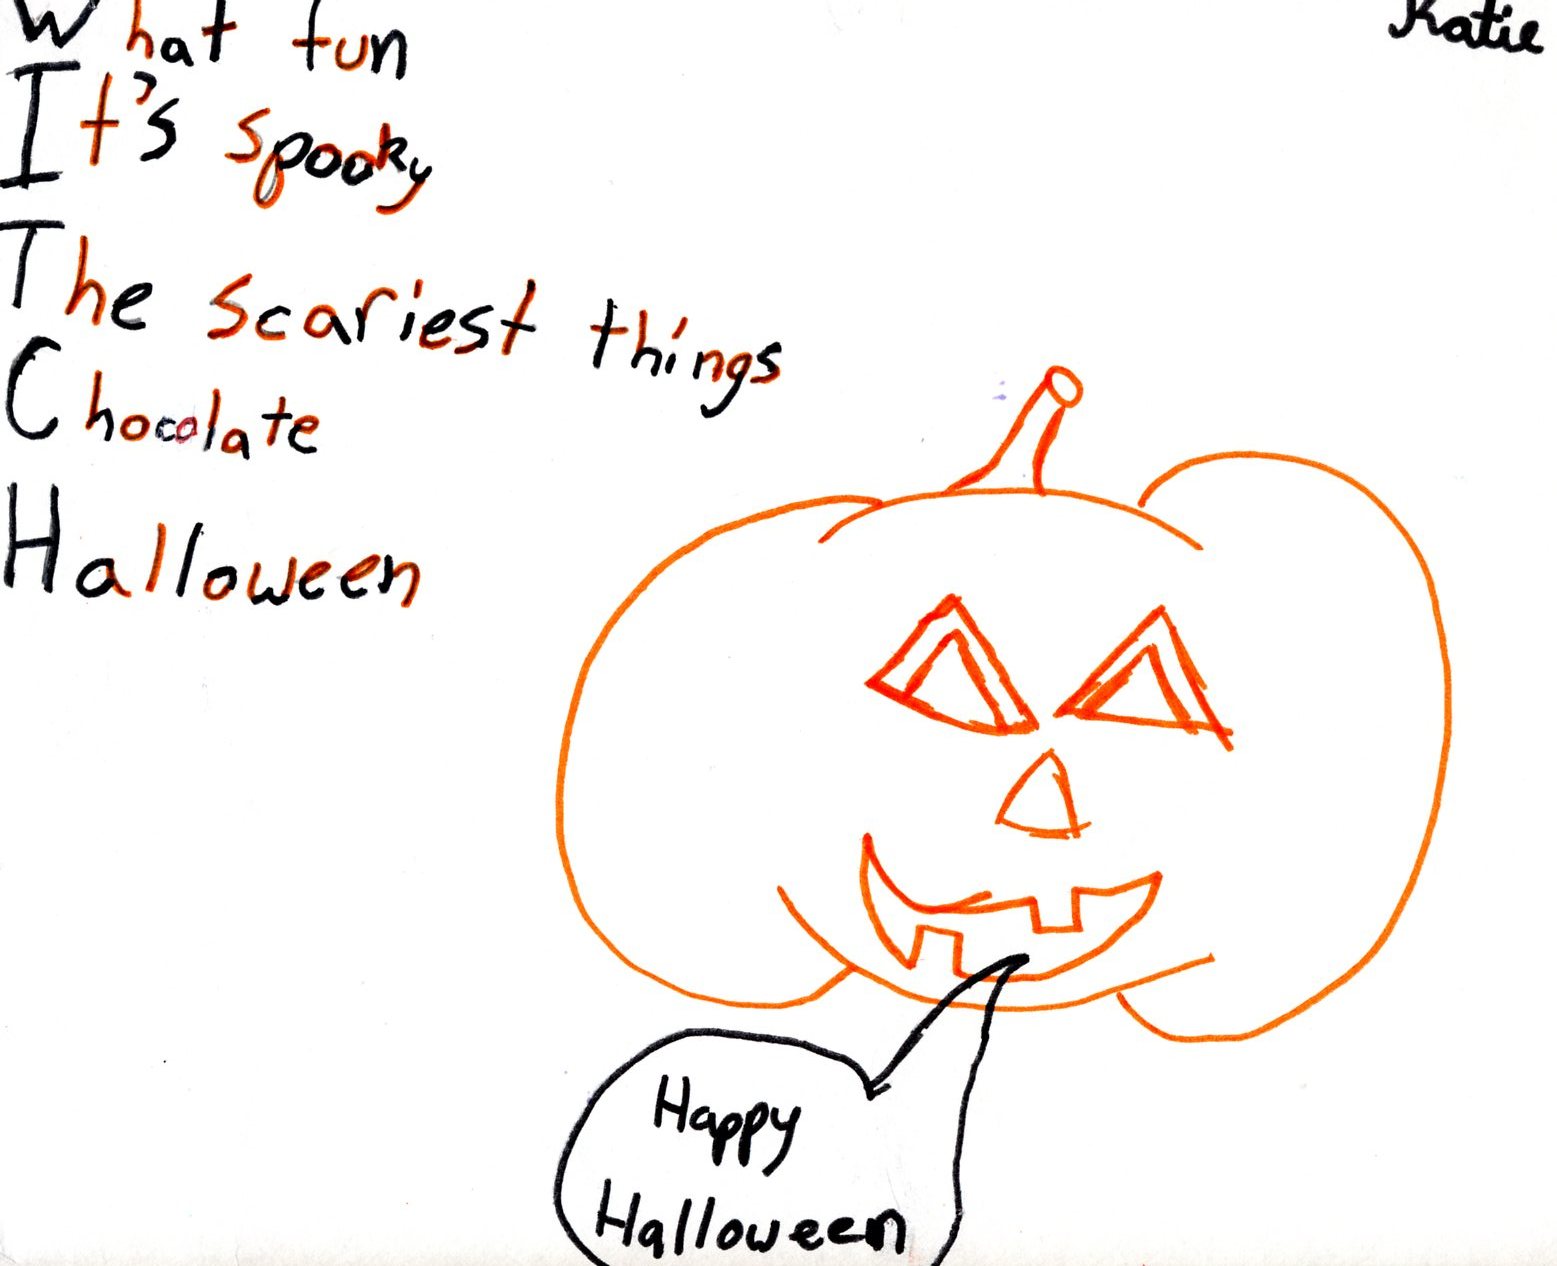 Halloween poem 1